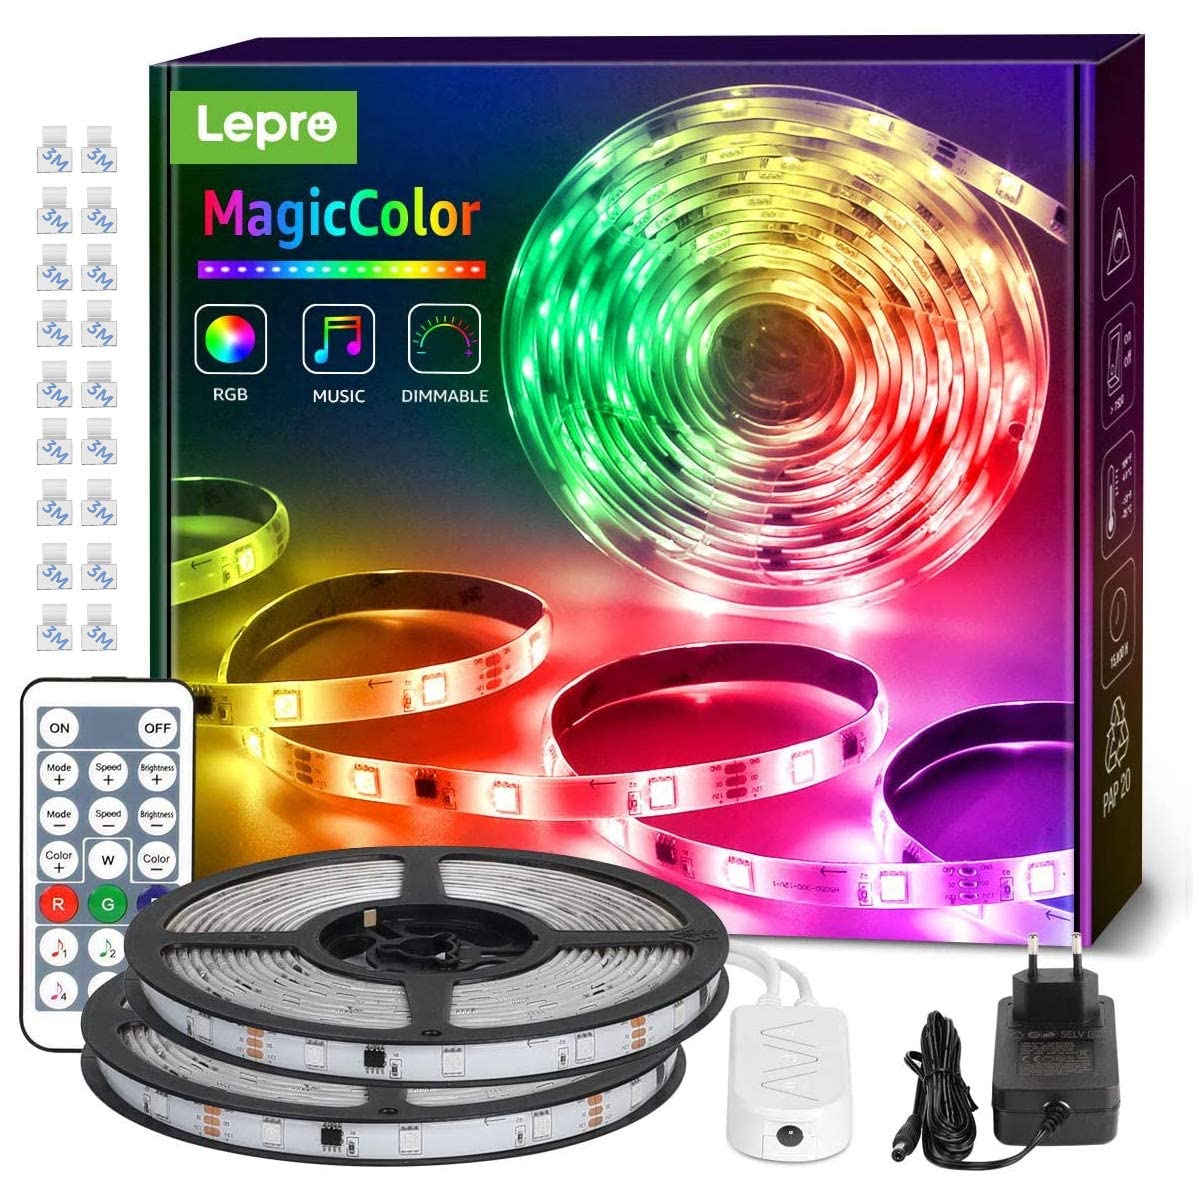 Lepro MagicColor LED Strip 20M(2x10M), 600 LEDs Streifen Lichterkette DreamColor, Lichterkette MagicColor, Musik Band mit Fernbedienung, Lichtband Wasserdicht IP65, MagicColor Dimmbar Lichtleiste